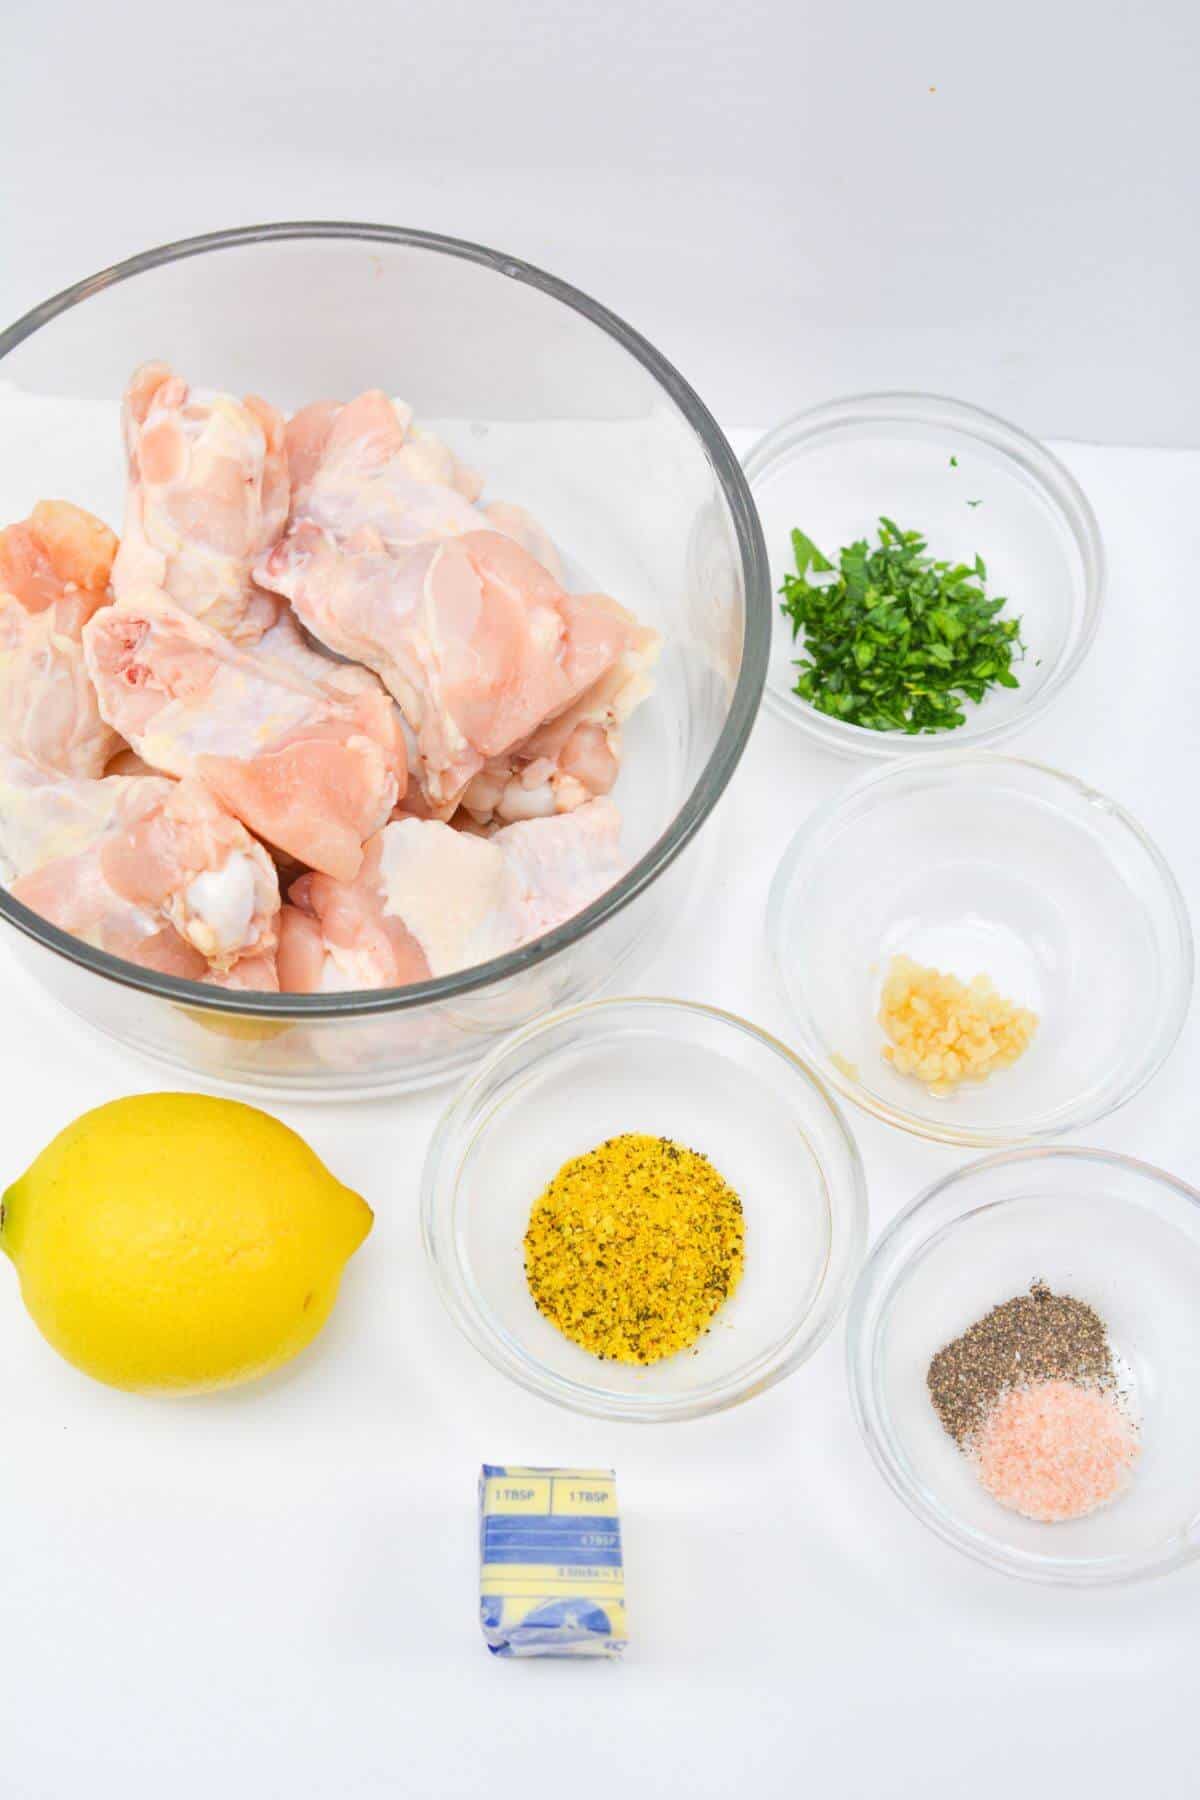 Ingredients for the lemon pepper chicken wings recipe.